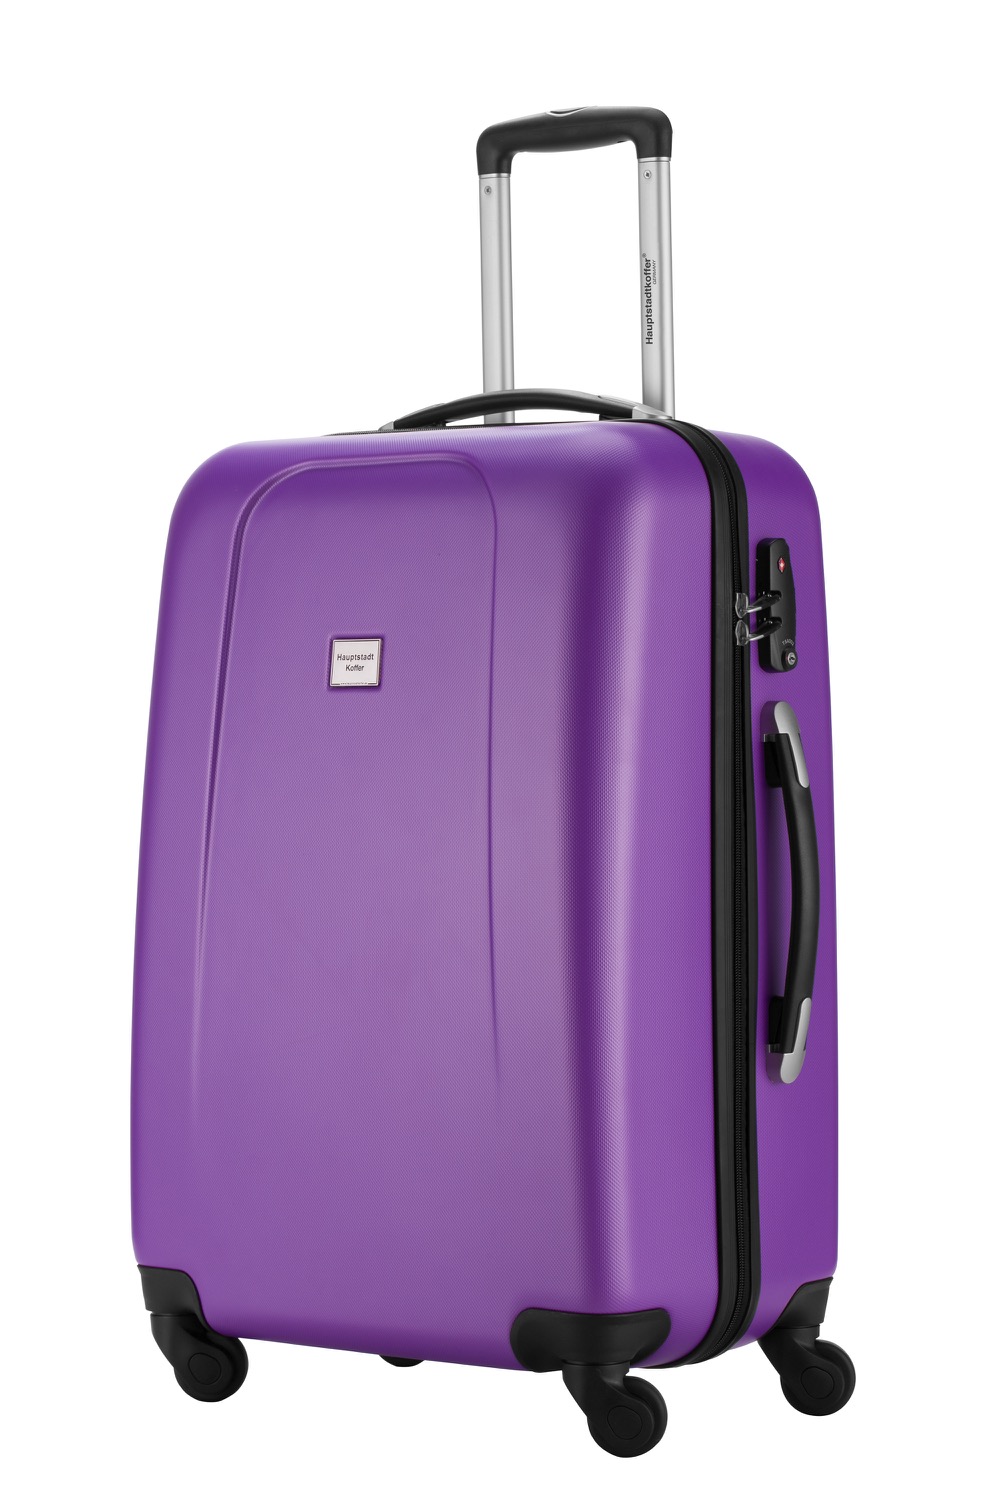 71 liter luggage suitcase baggage trolley case bag hard shell purple TSA | eBay